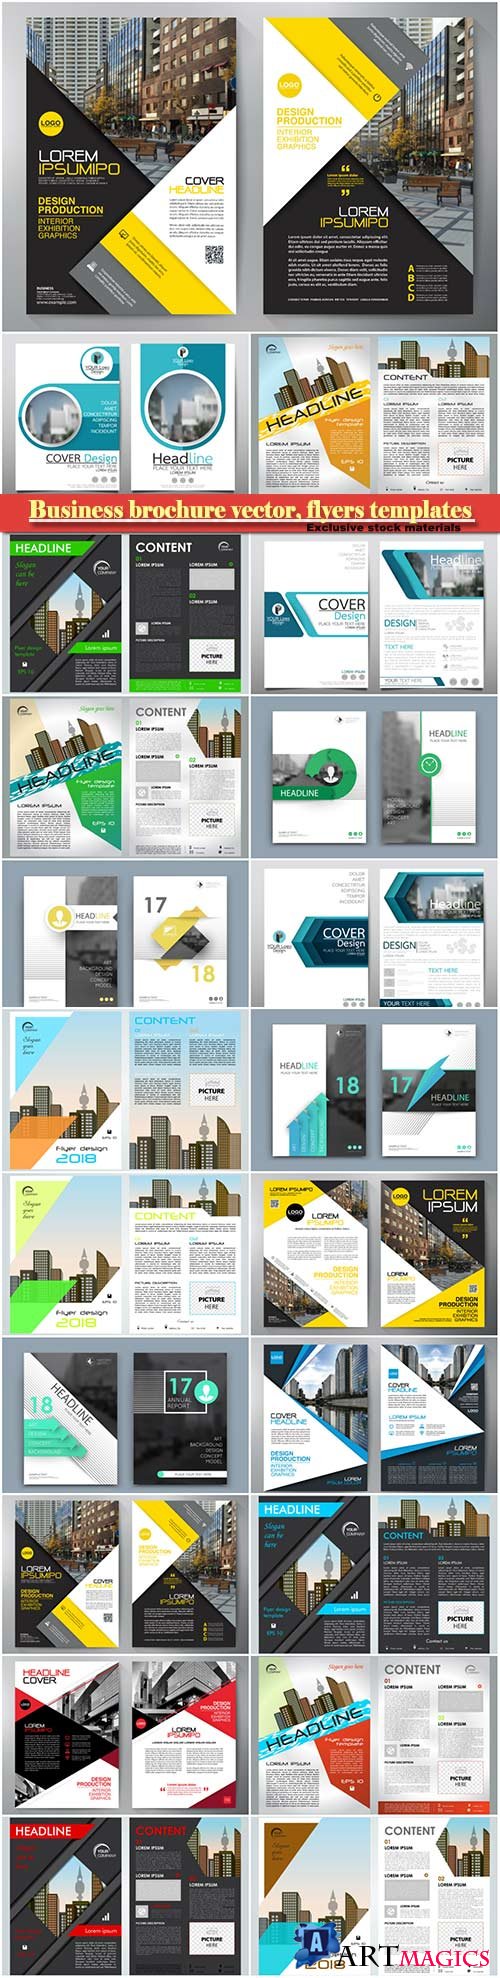 Business brochure vector, flyers templates # 33